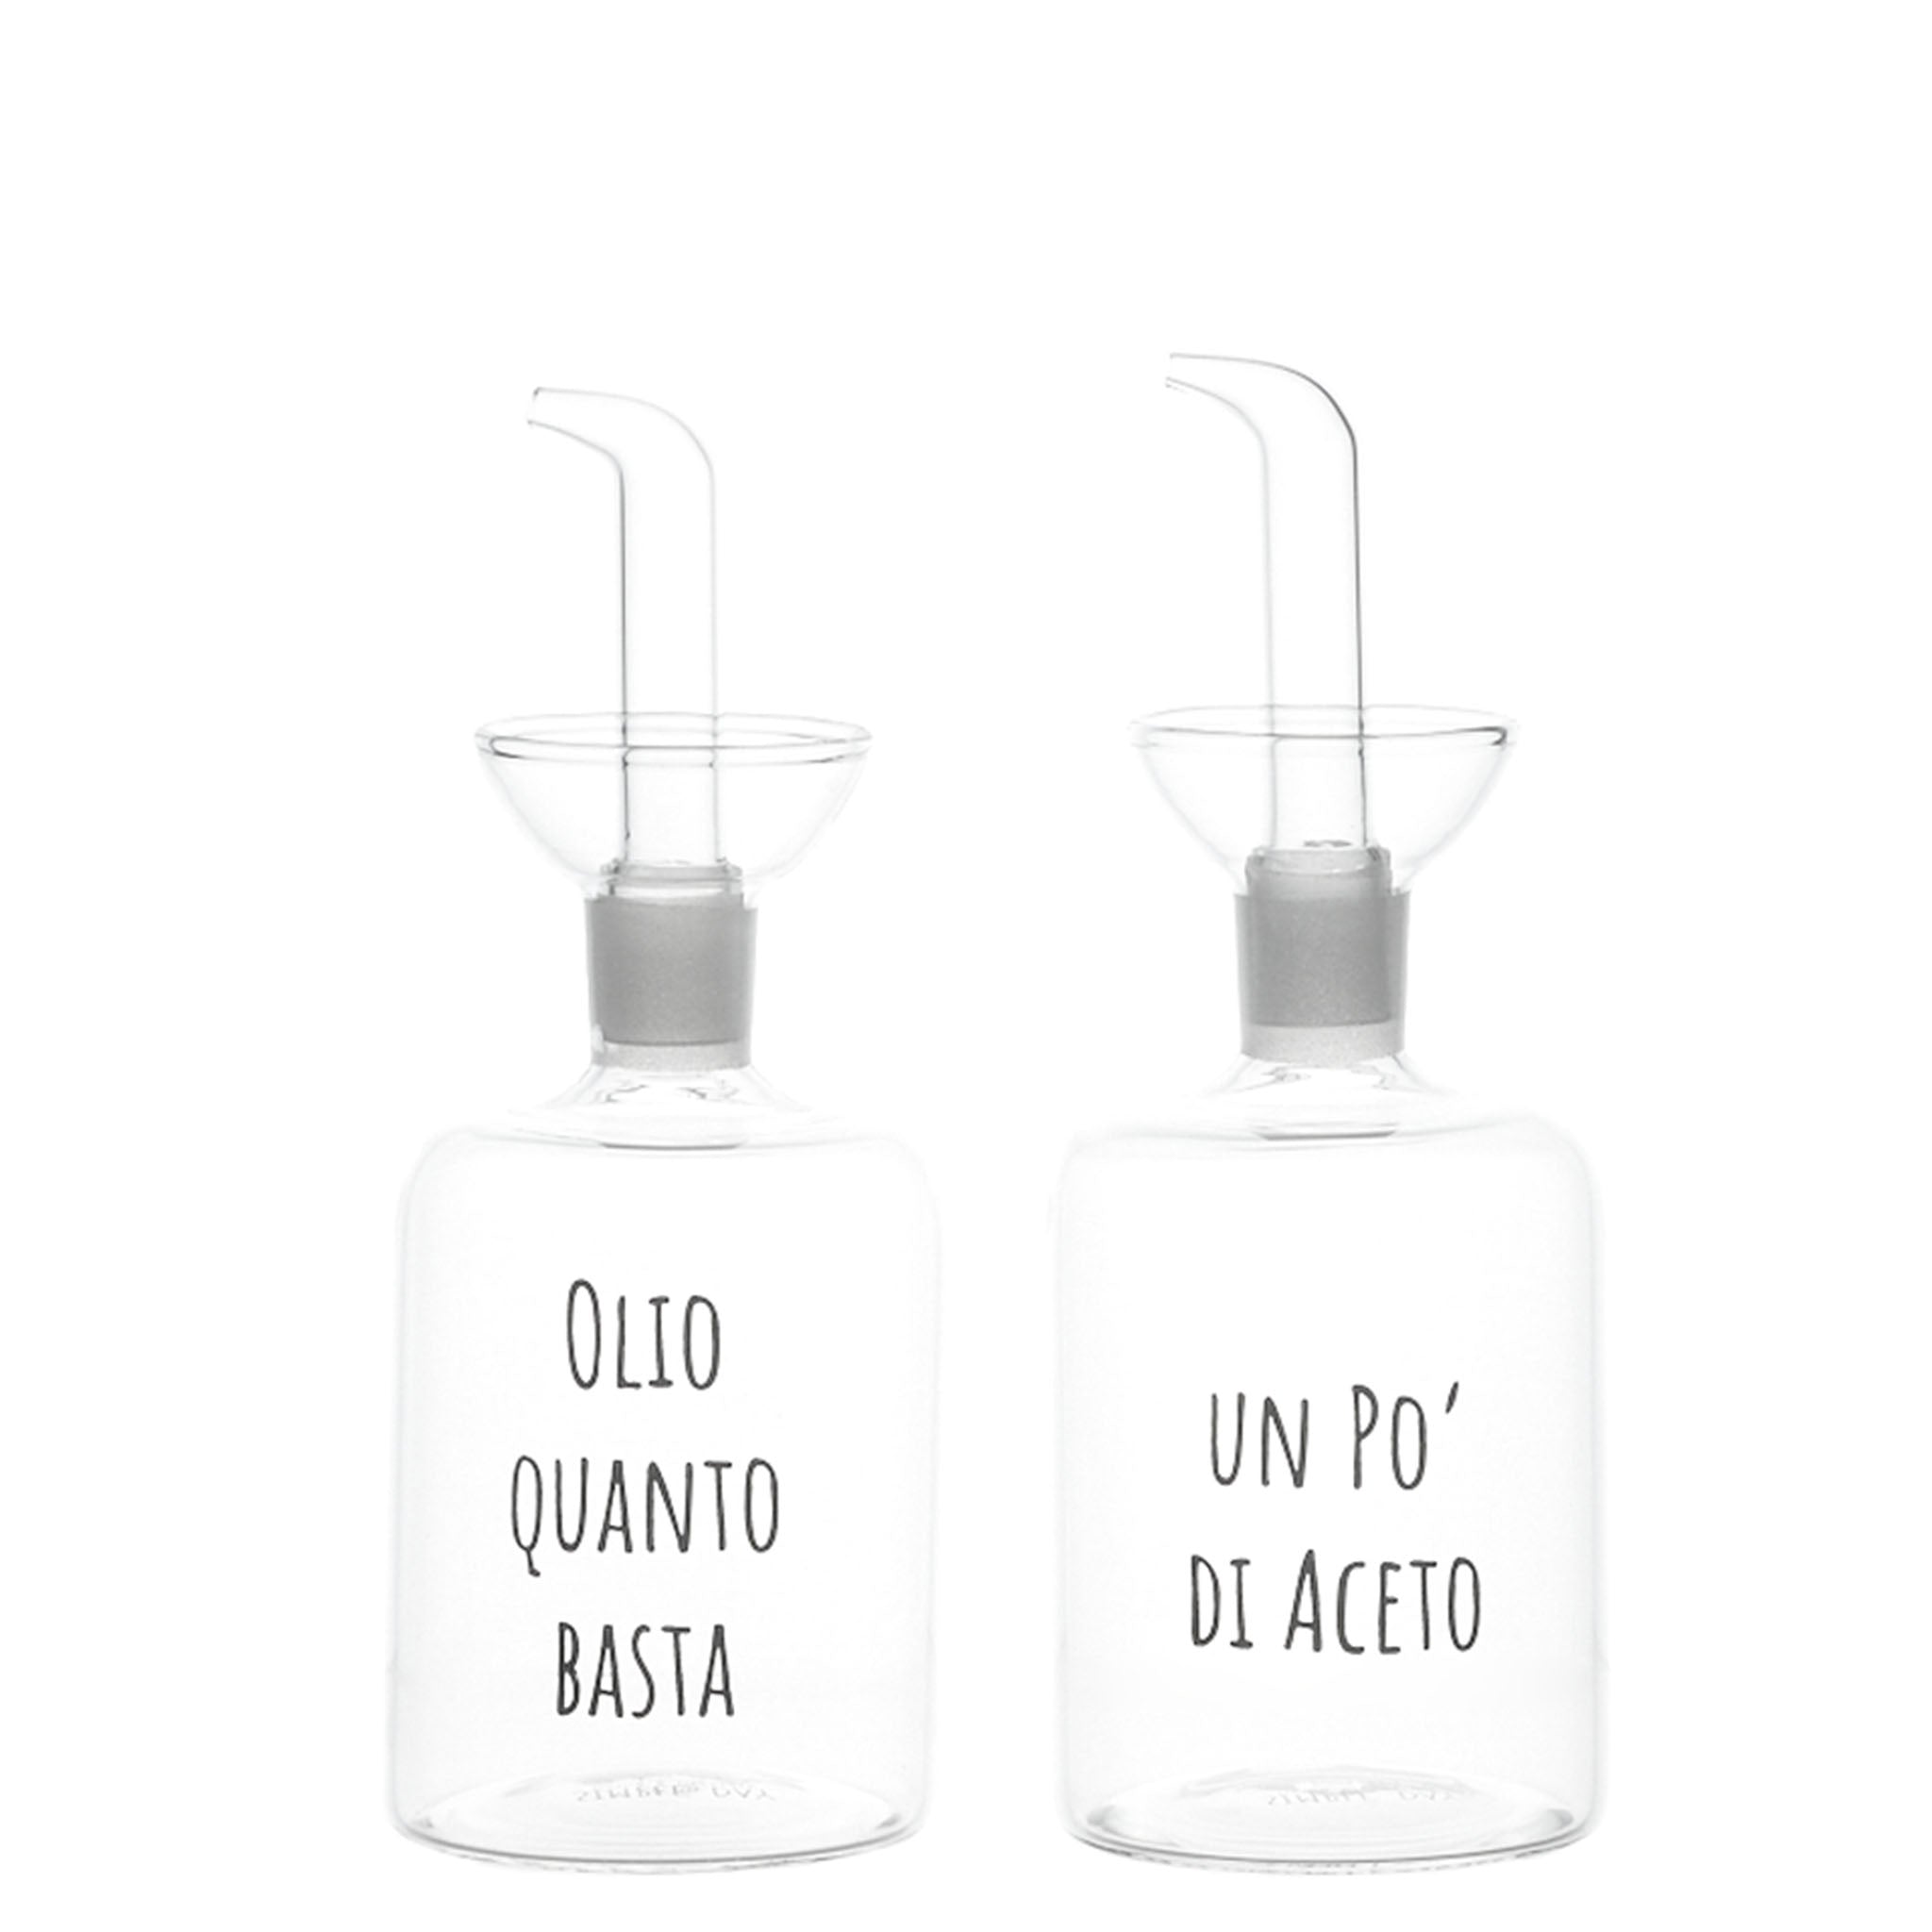 Set 2 oil bottles as enough - a little vinegar in printed 2x250ml